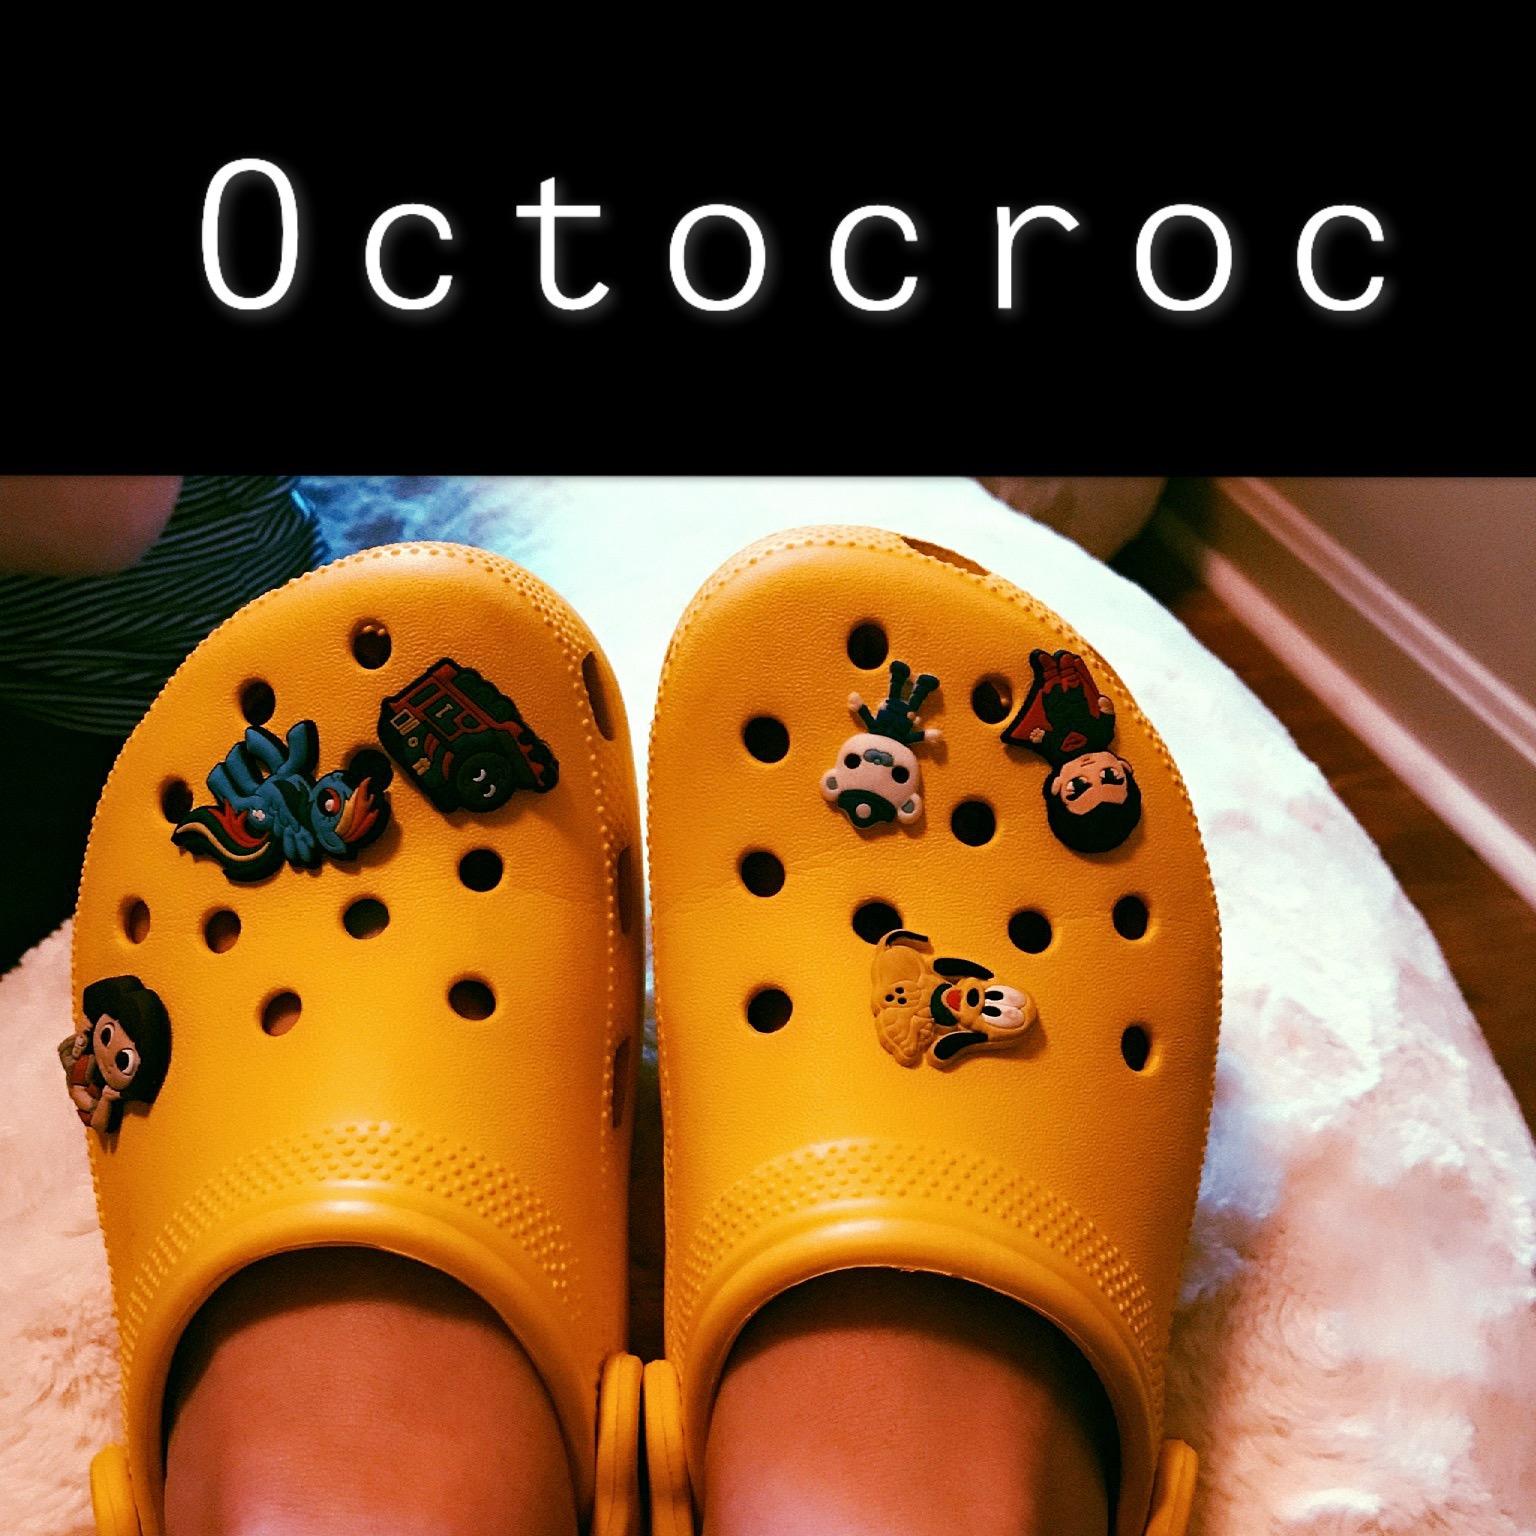 Octacroc